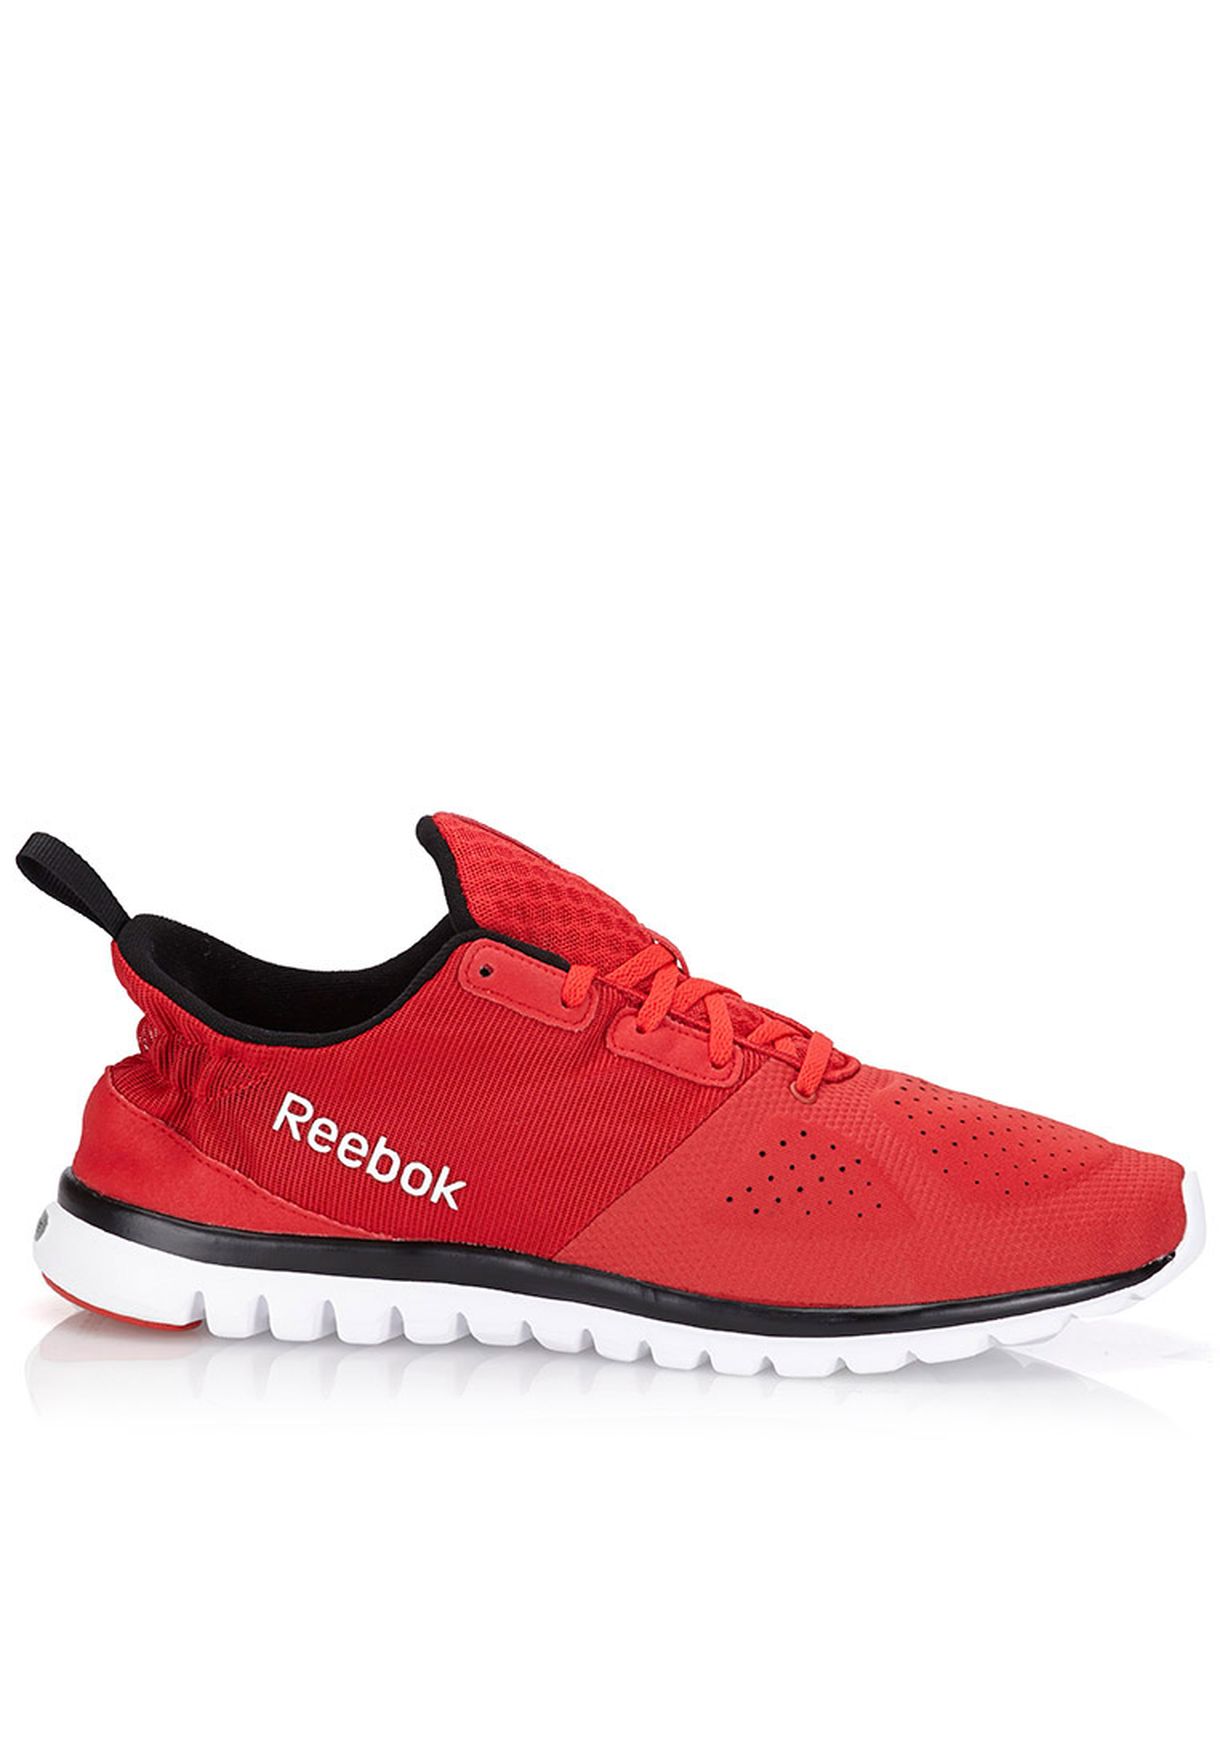 reebok sublite aim 2. running shoes